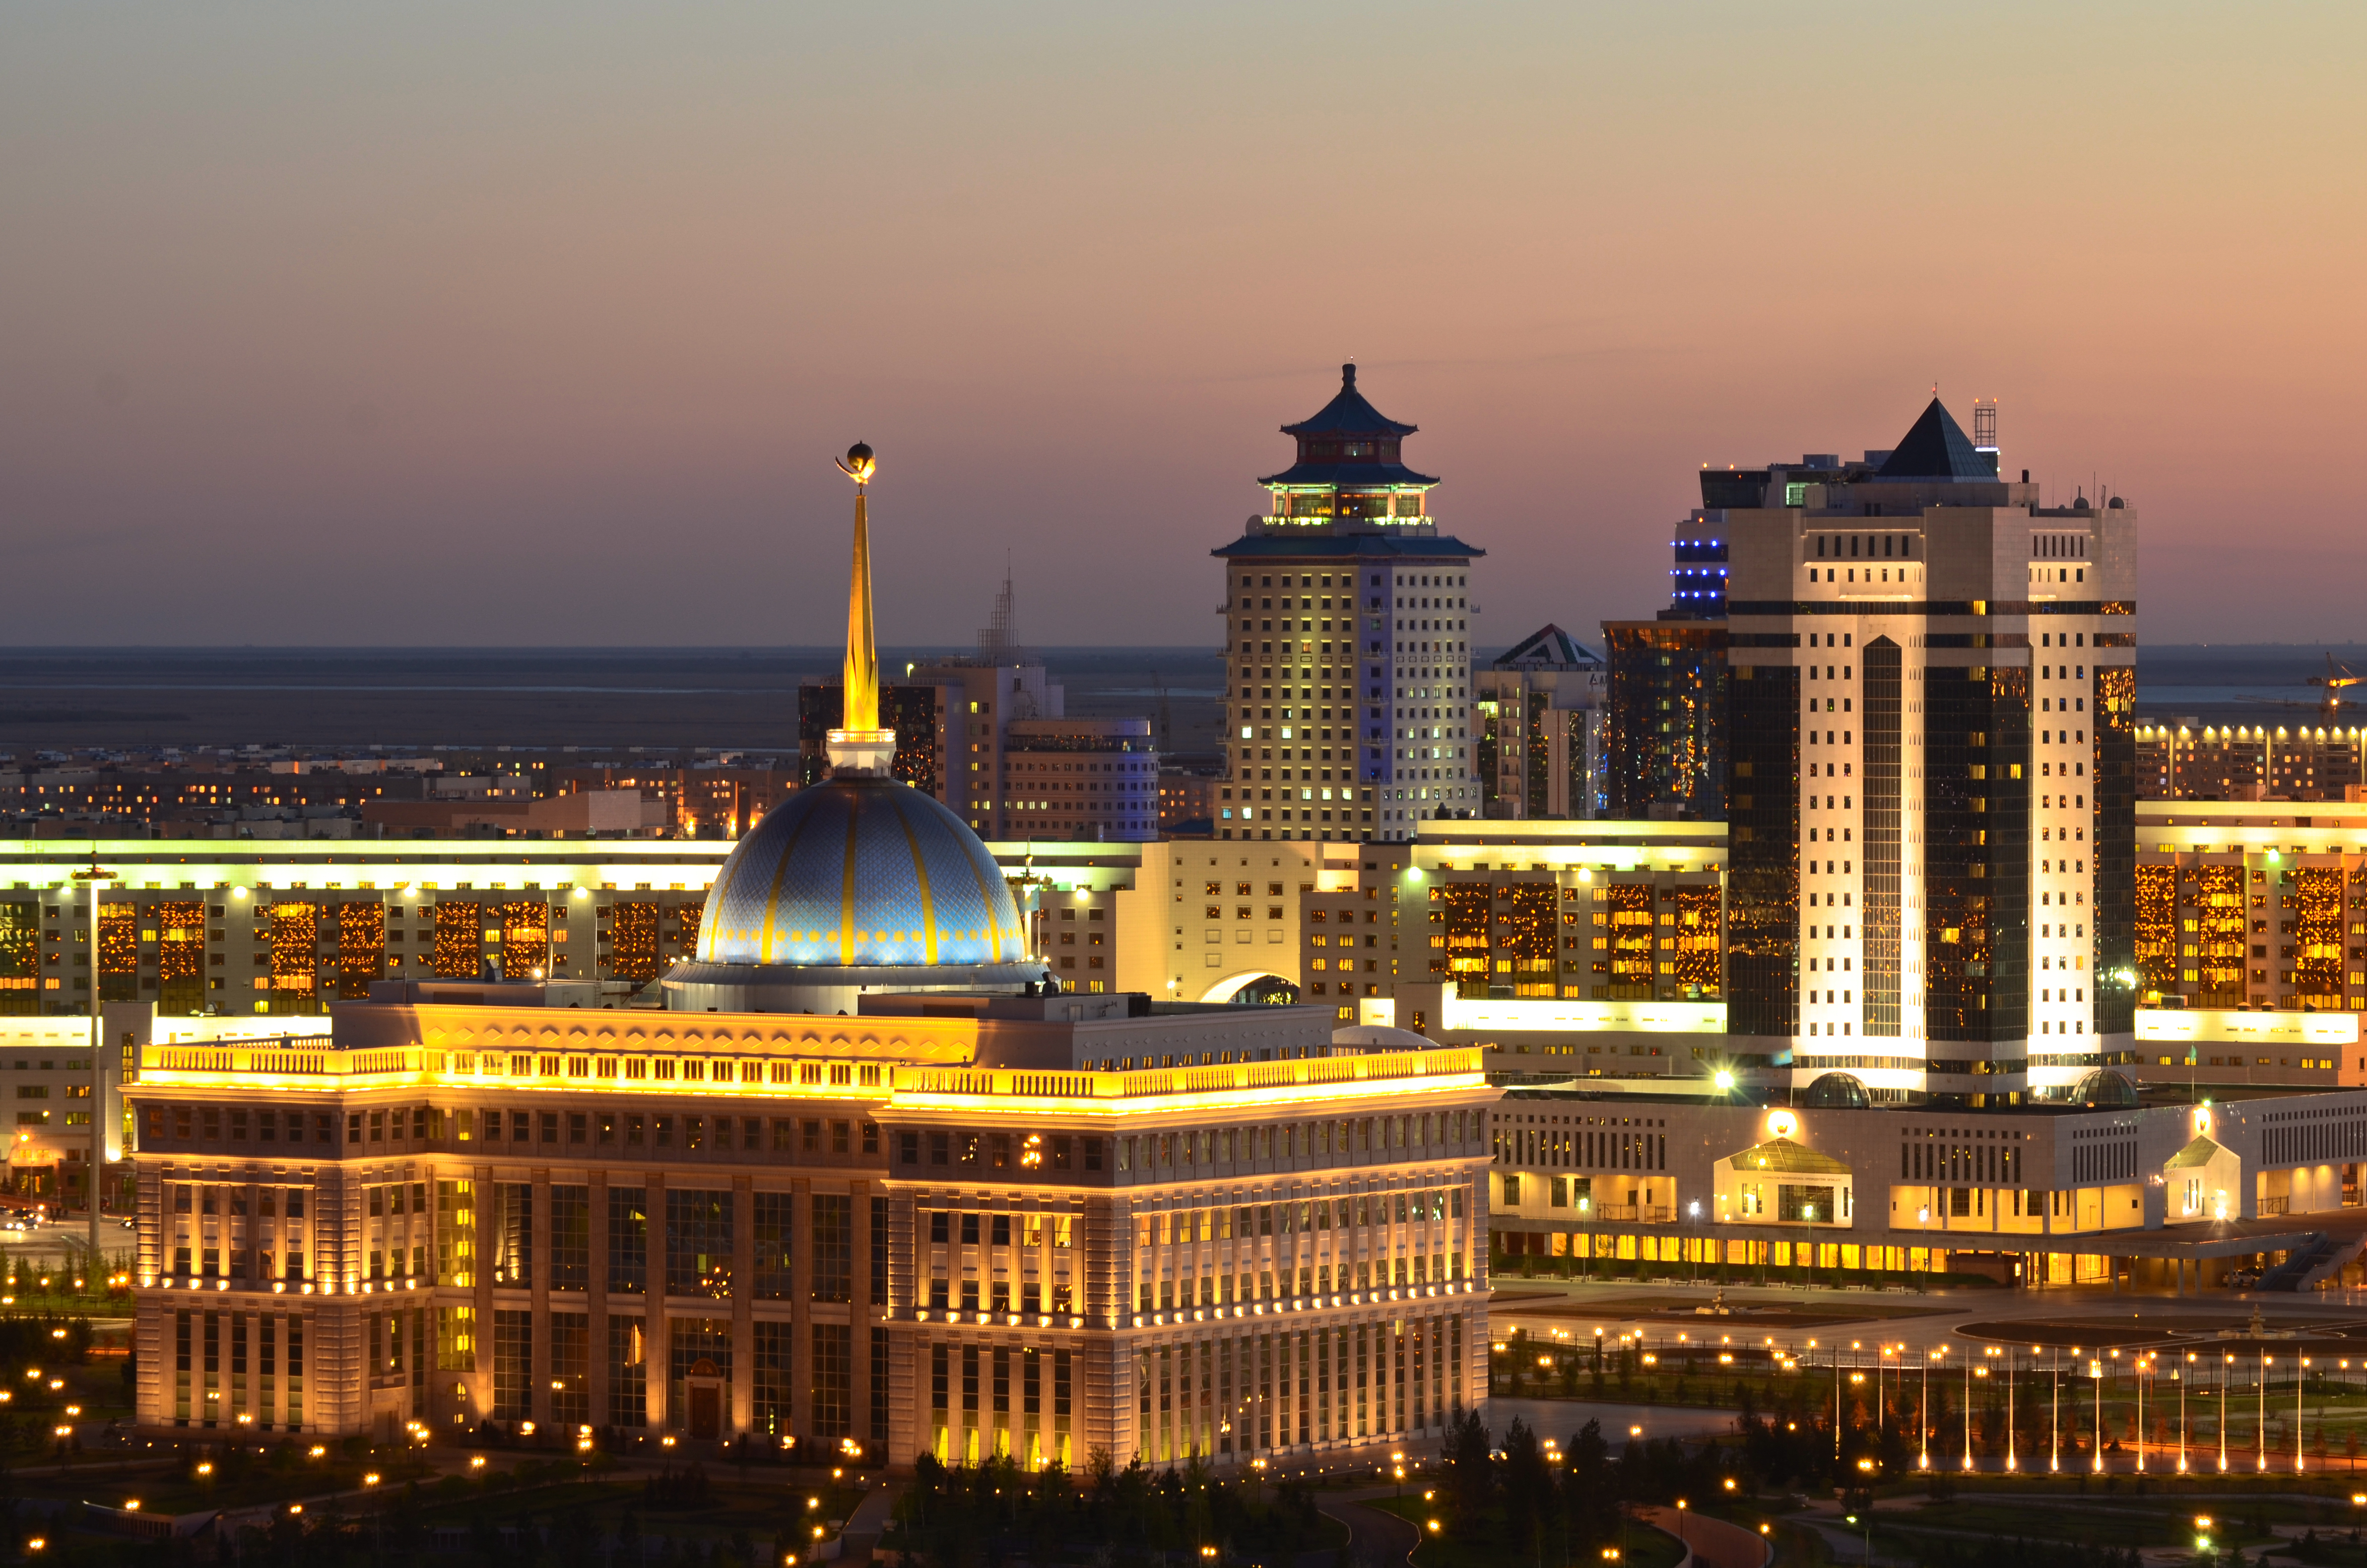 Астана панорама